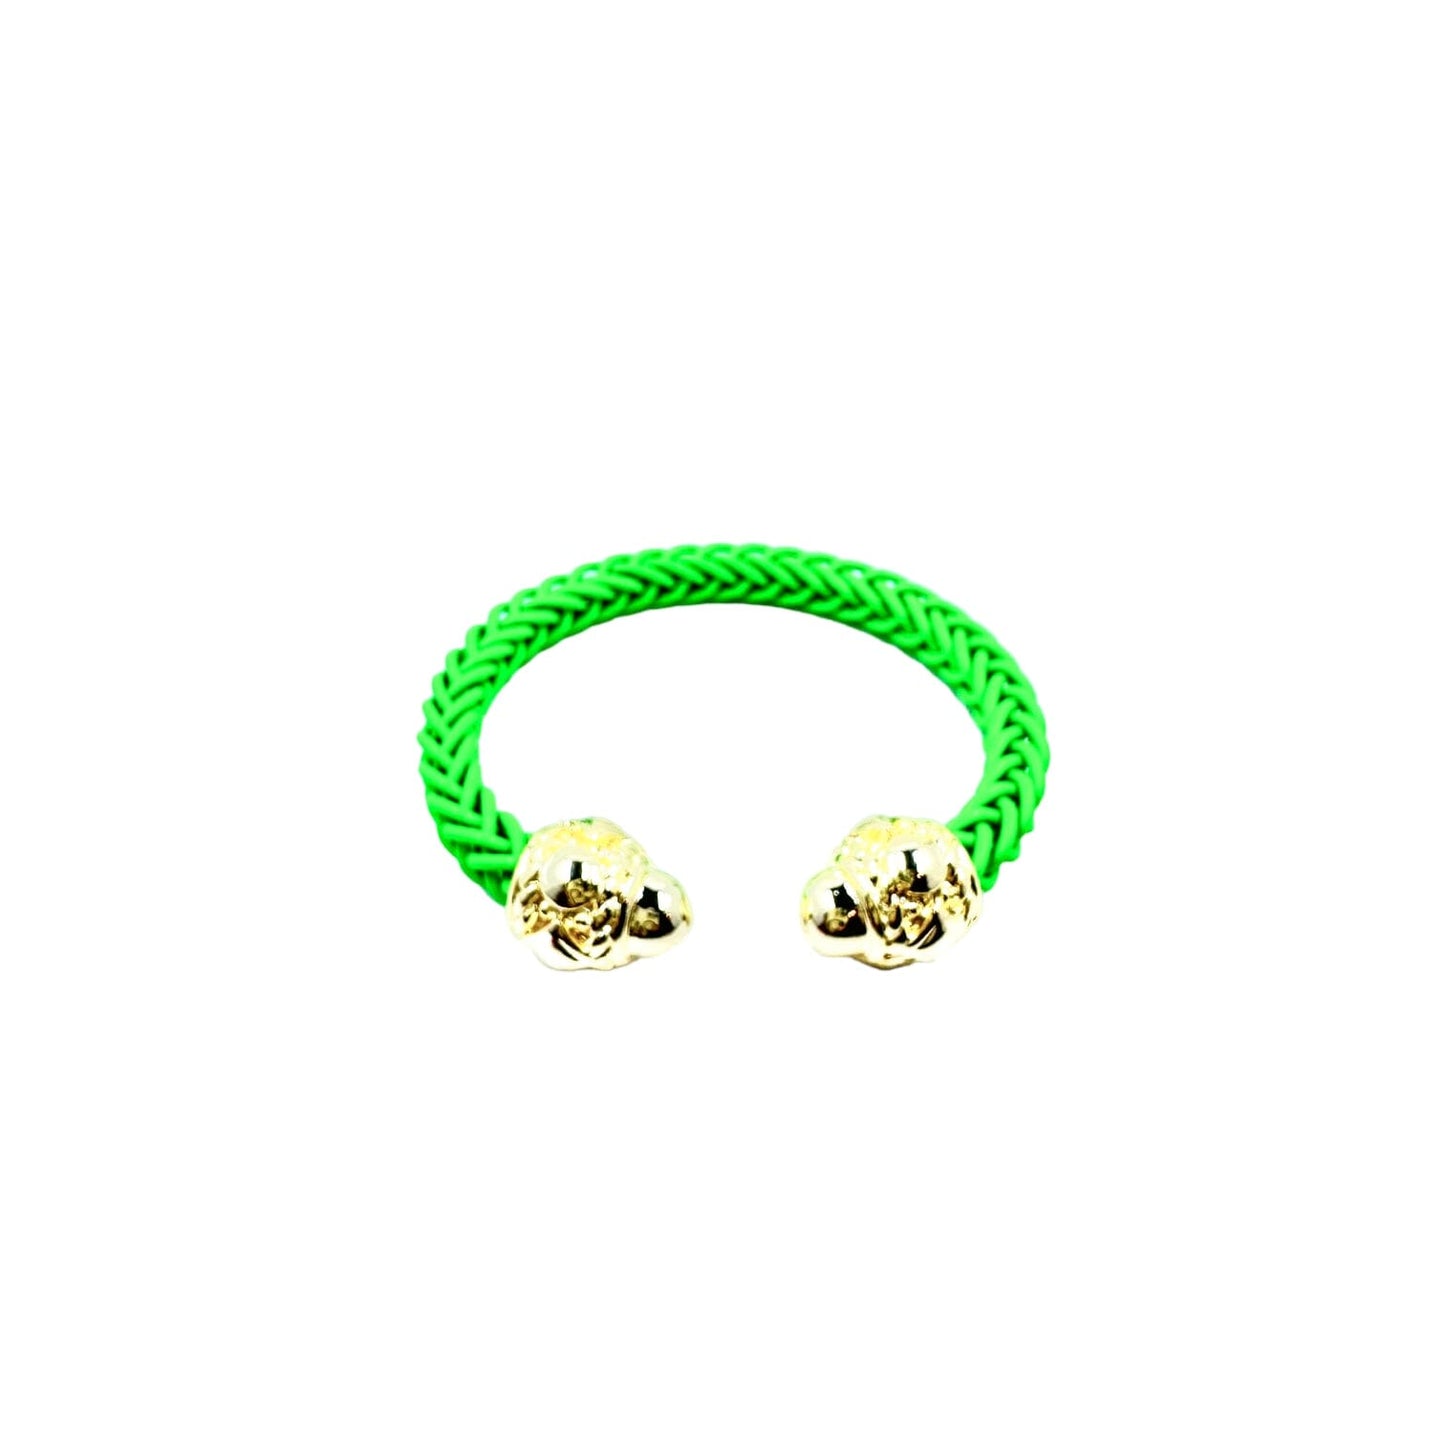 Tessa Braided Bangle Cable Gold Tip Bracelet Bracelets TRENDZIO Green 